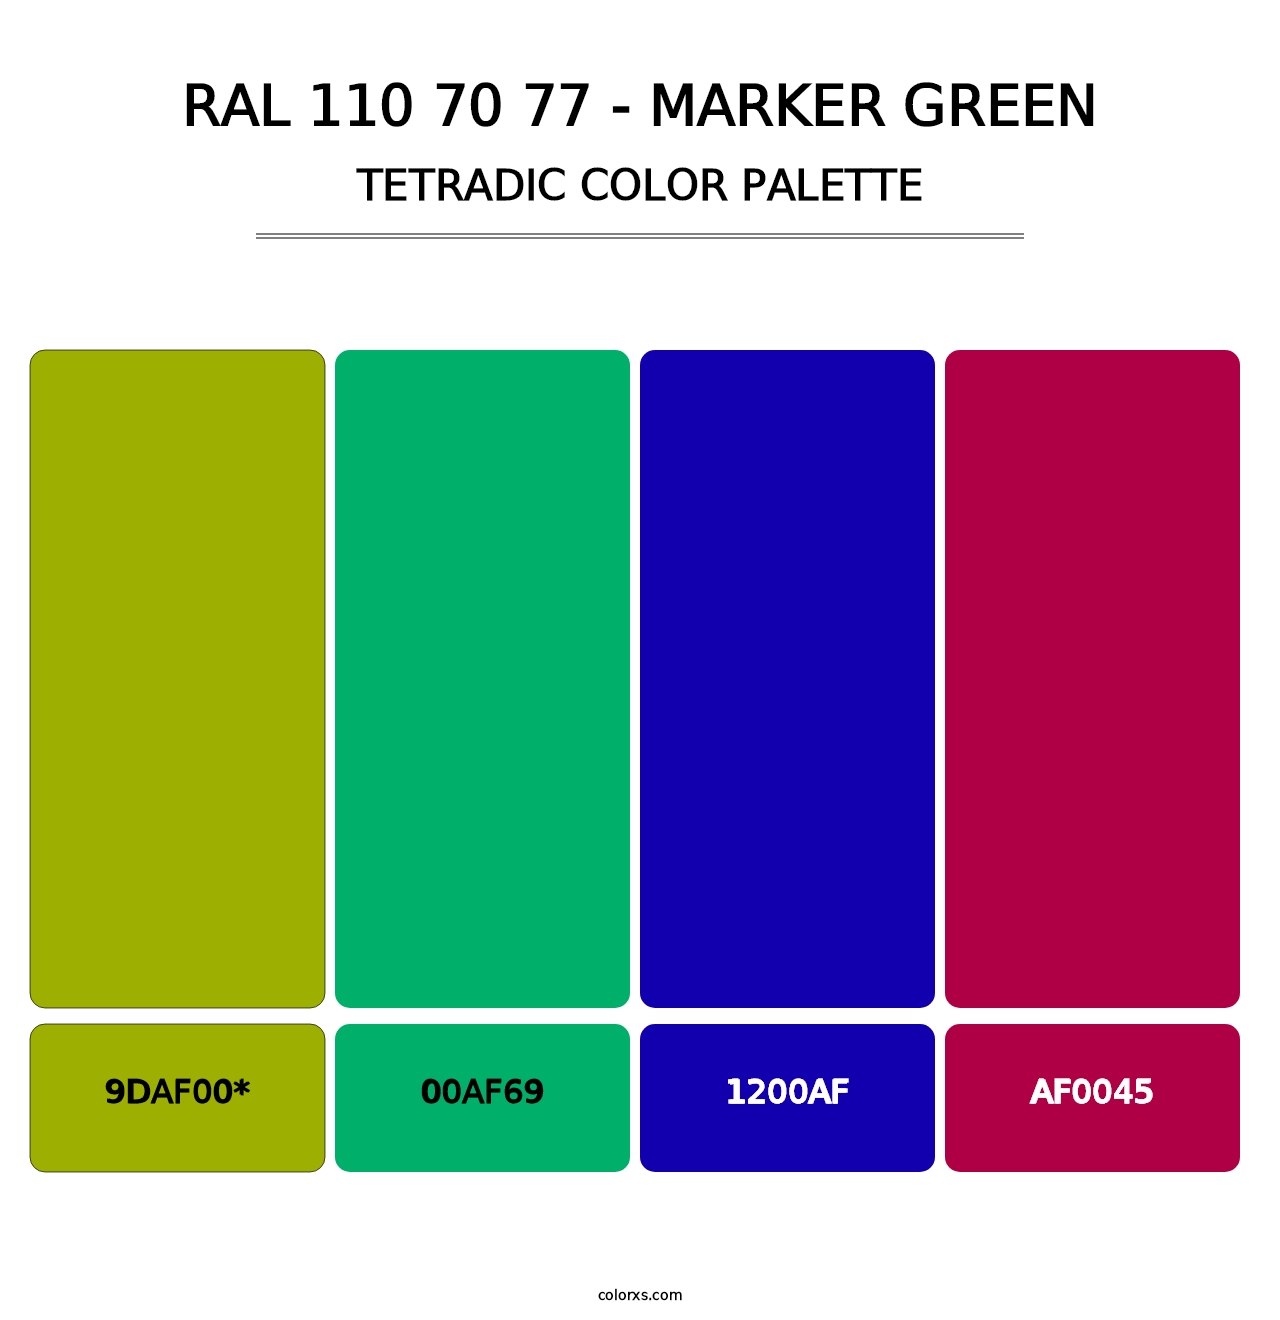 RAL 110 70 77 - Marker Green - Tetradic Color Palette